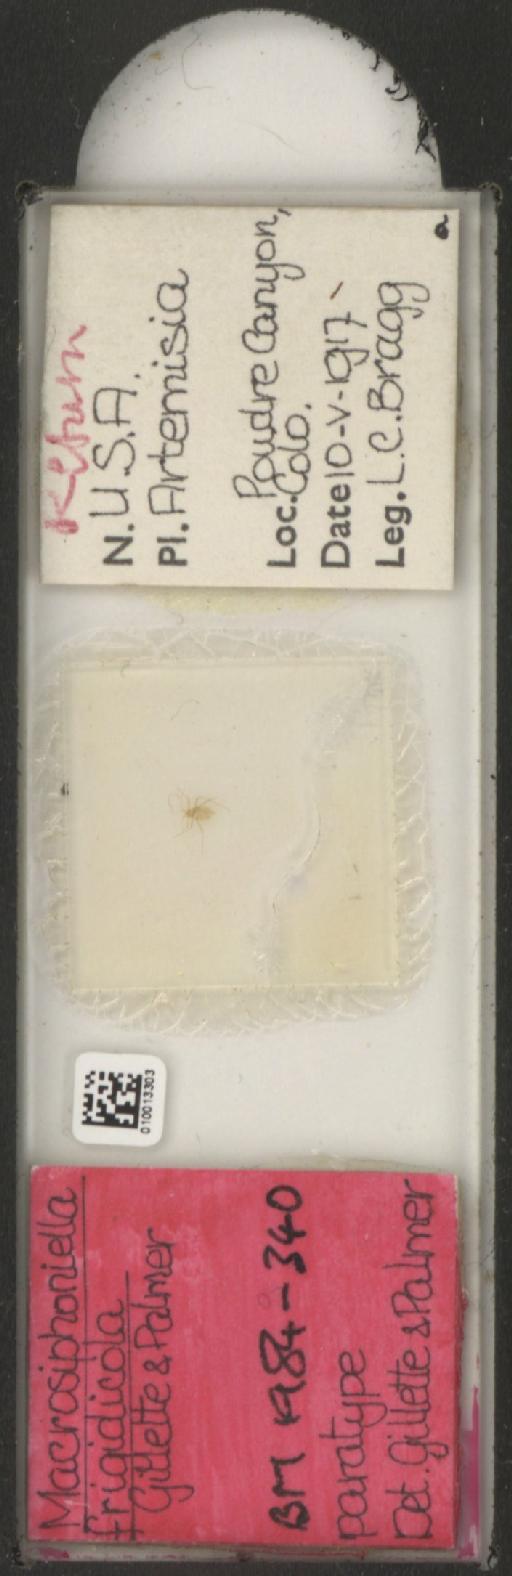 Macrosiphoniella frigidicola Gillette & Palmer, 1928 - 010013303_112660_1094722